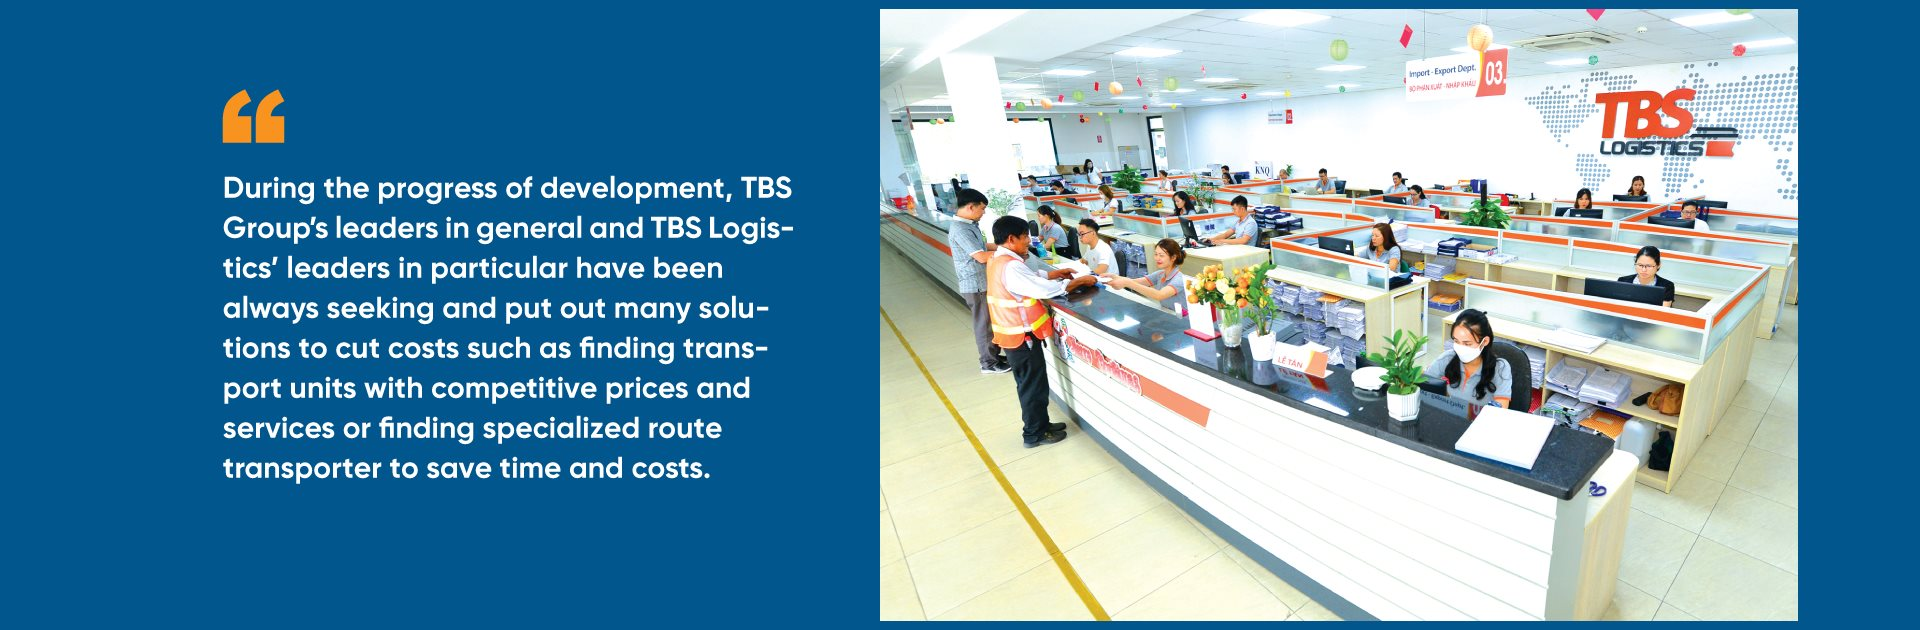 tbs-logistics-xanh-eng-5.png